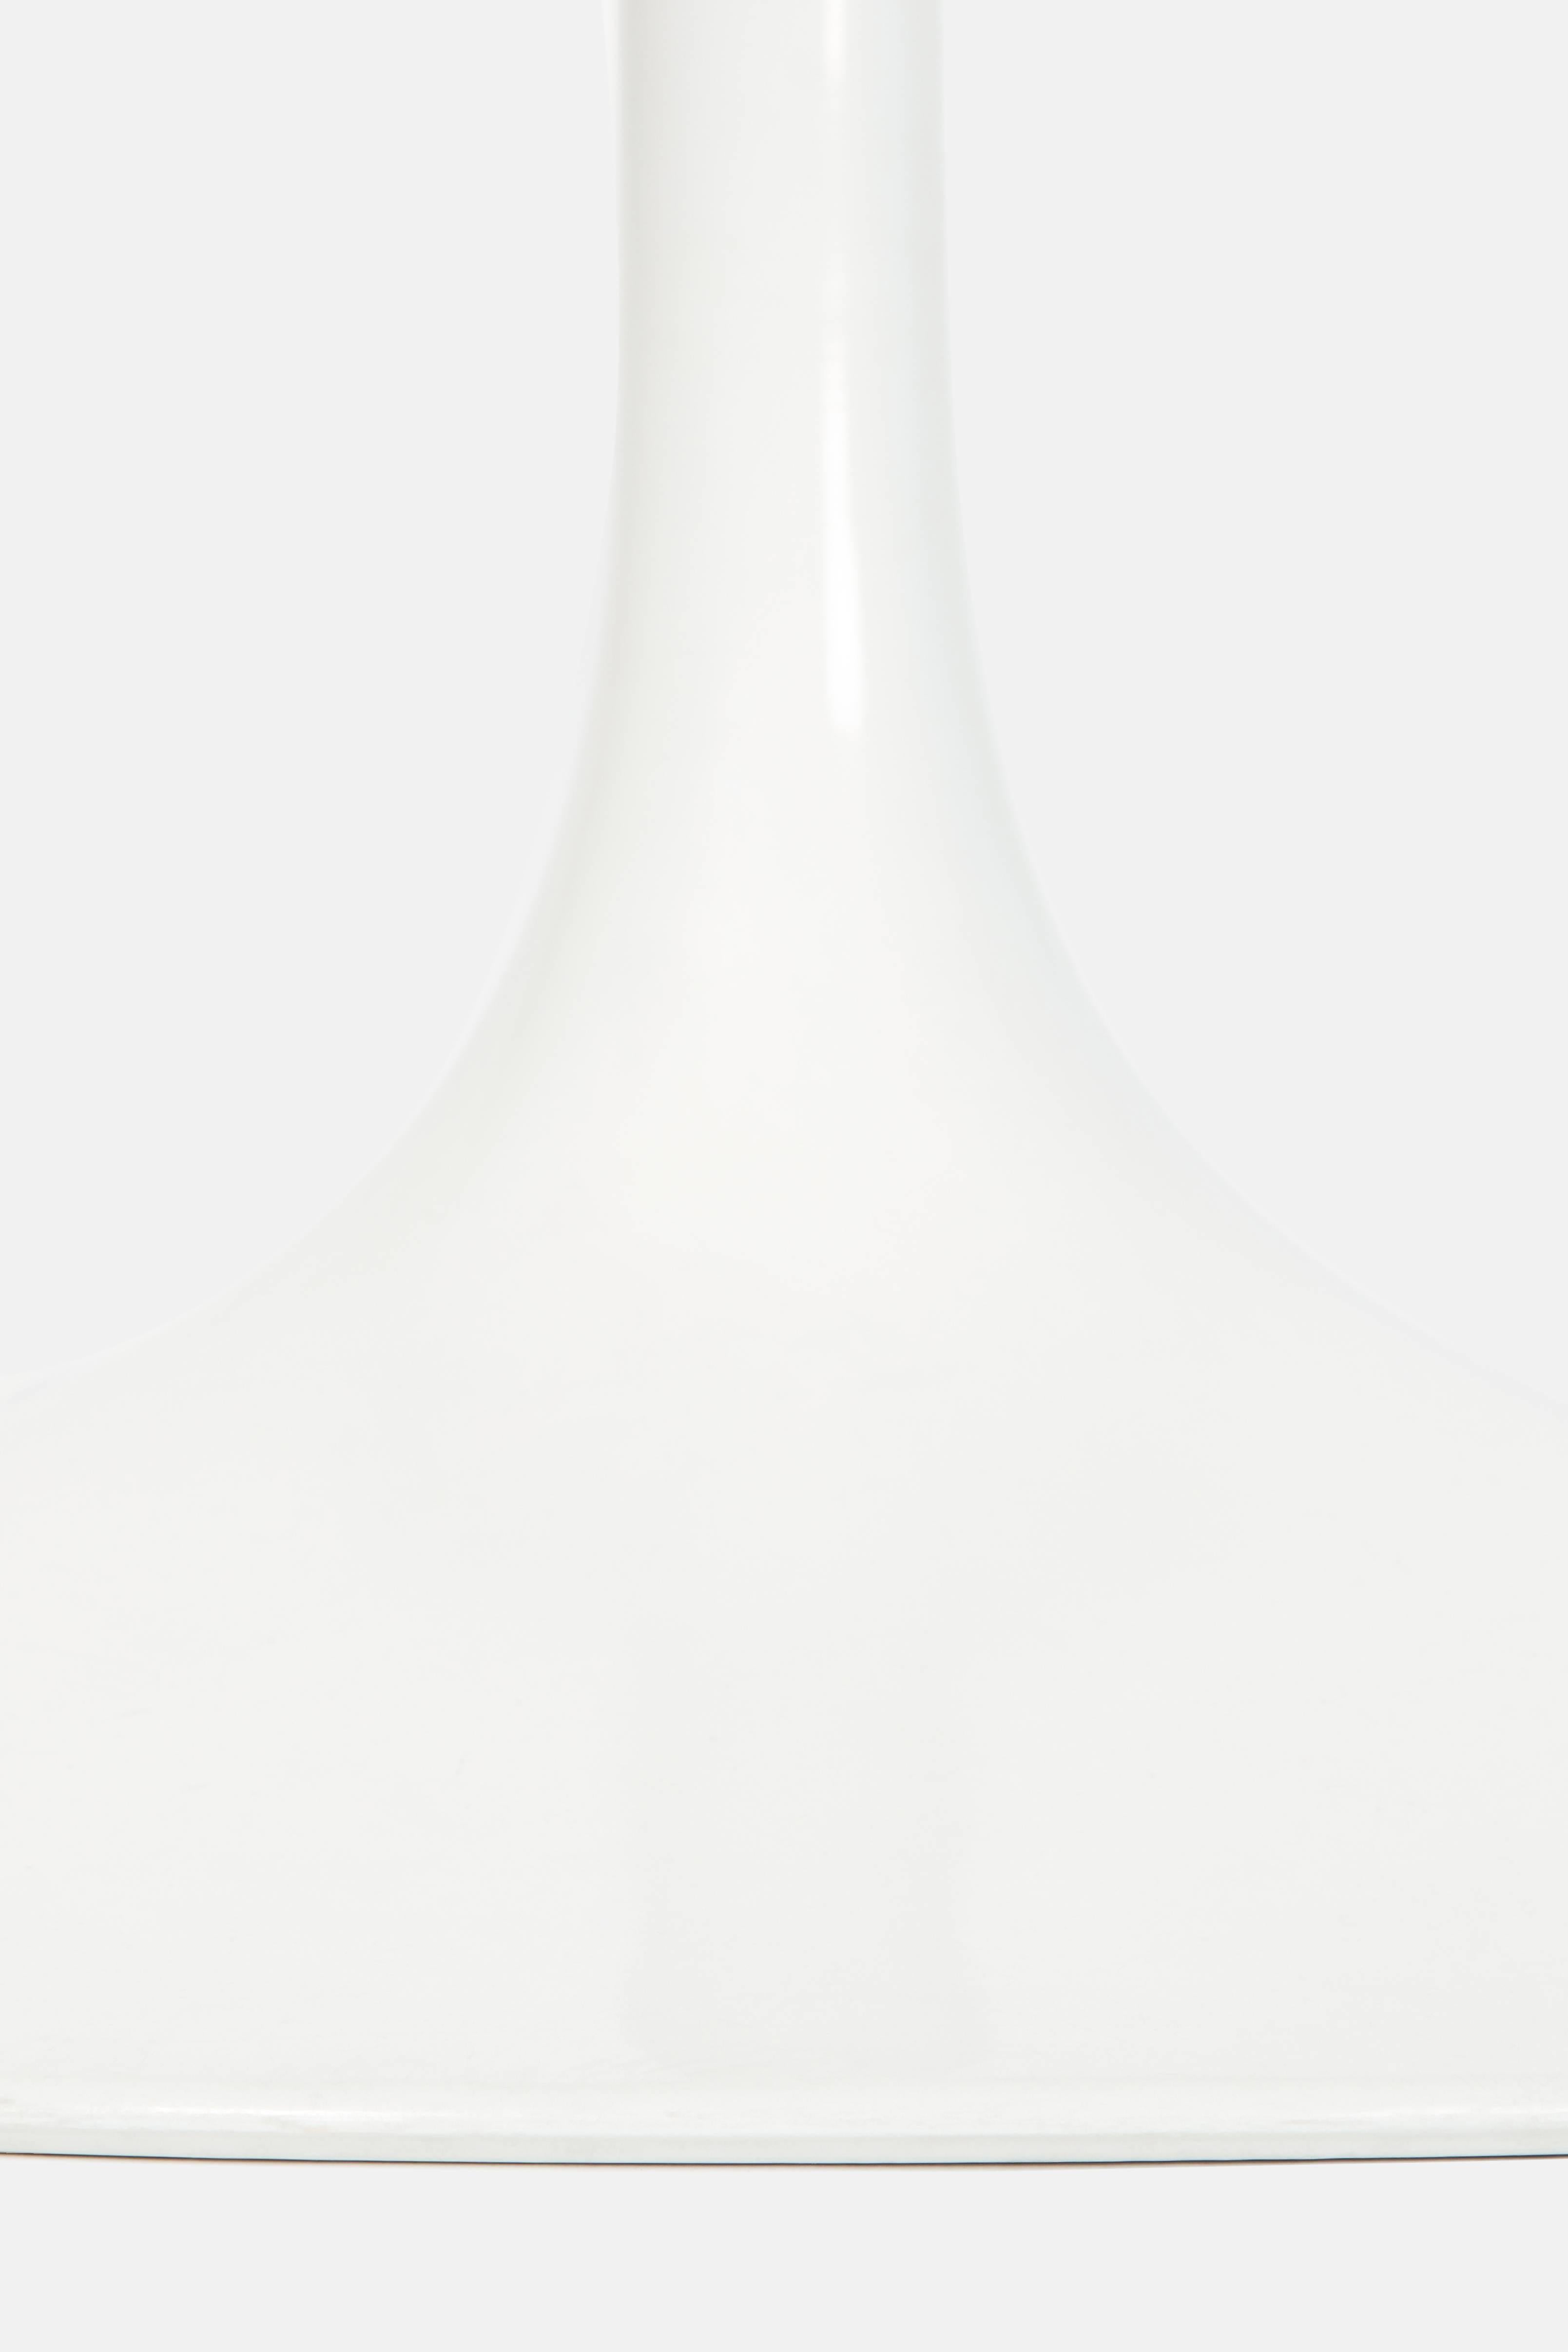 Eero Saarinen “Tulip” Marble Dining Table Knoll International, 1970s 2